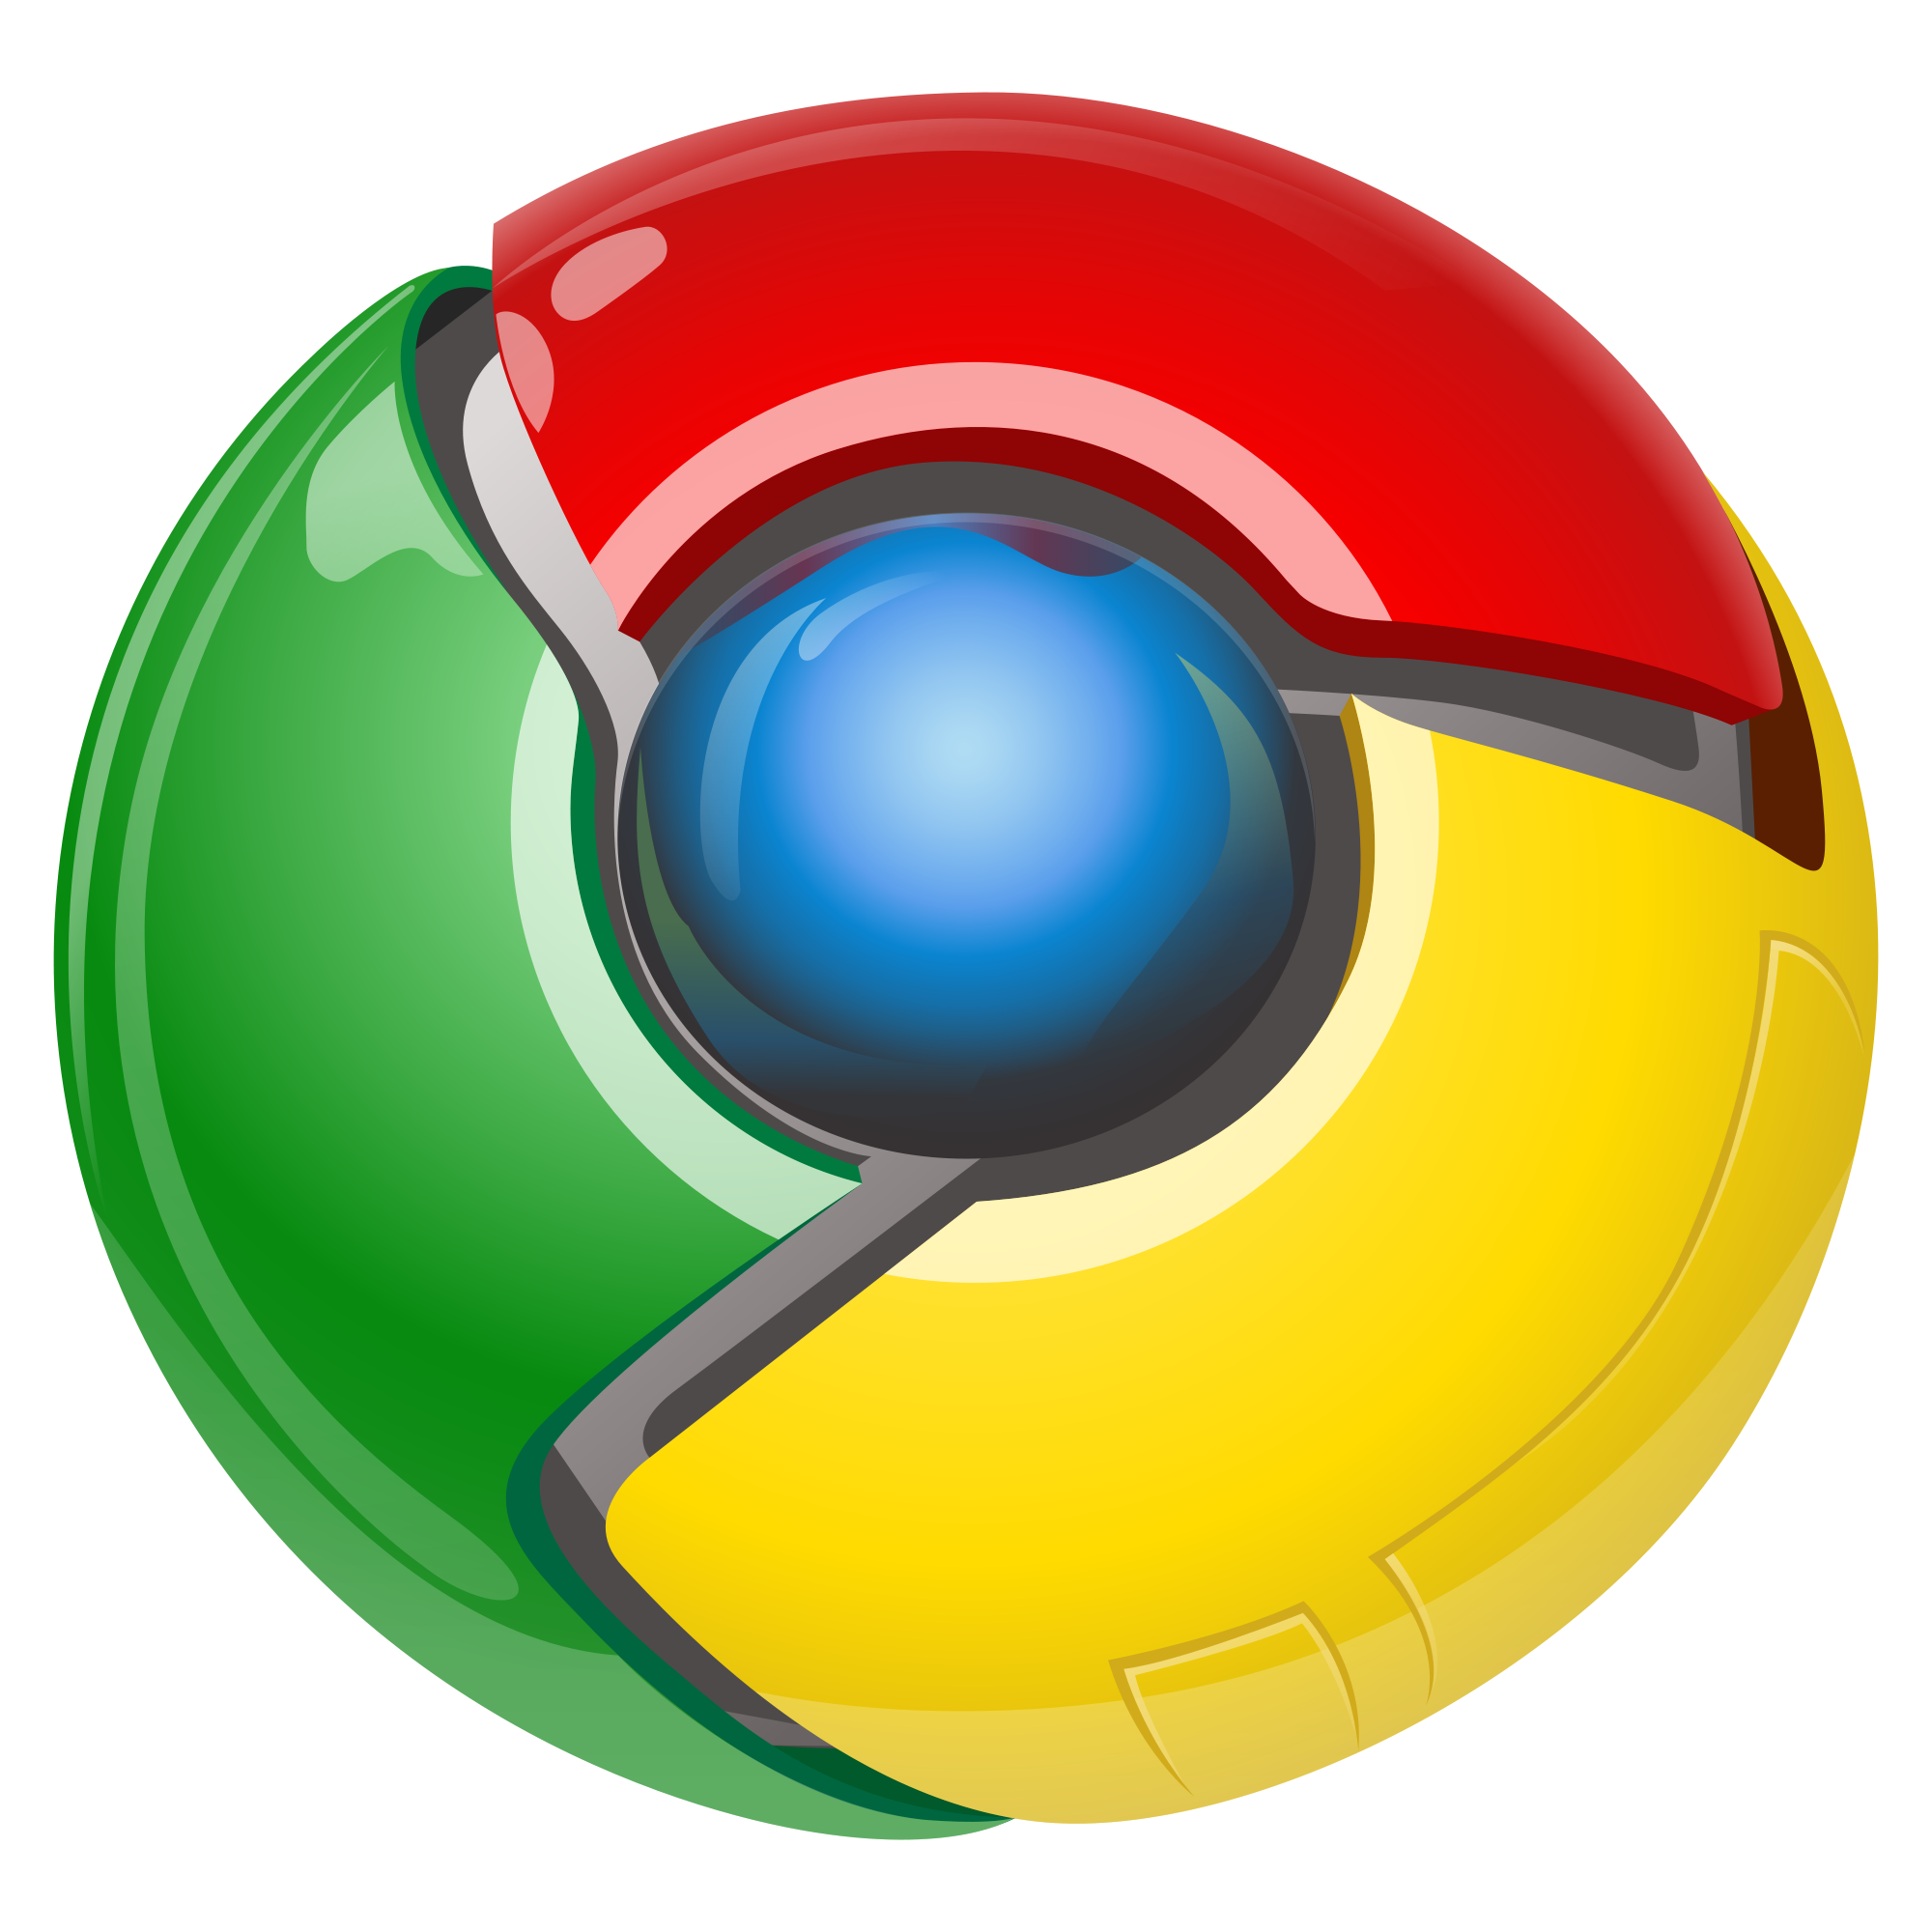 Сайт для скачивания браузеров. Гугл хром. Chrome браузер. Значок хром. Логотип гугл хром.